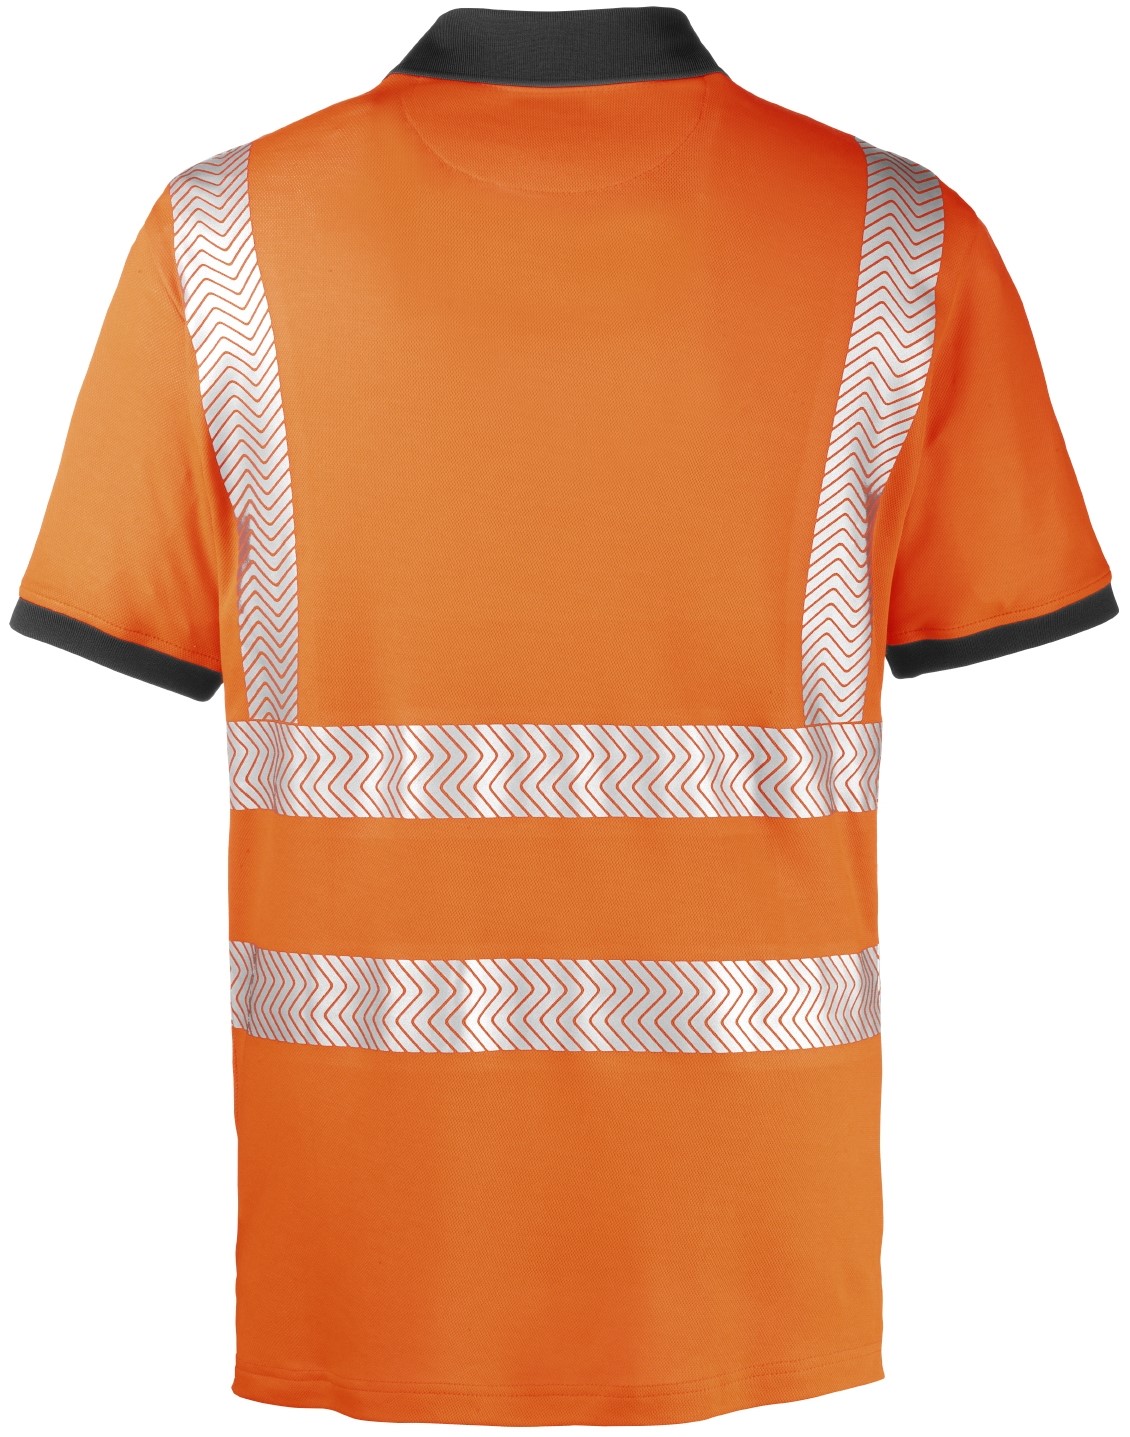 4PROTECT® Warnschutz-Poloshirt ORLANDO